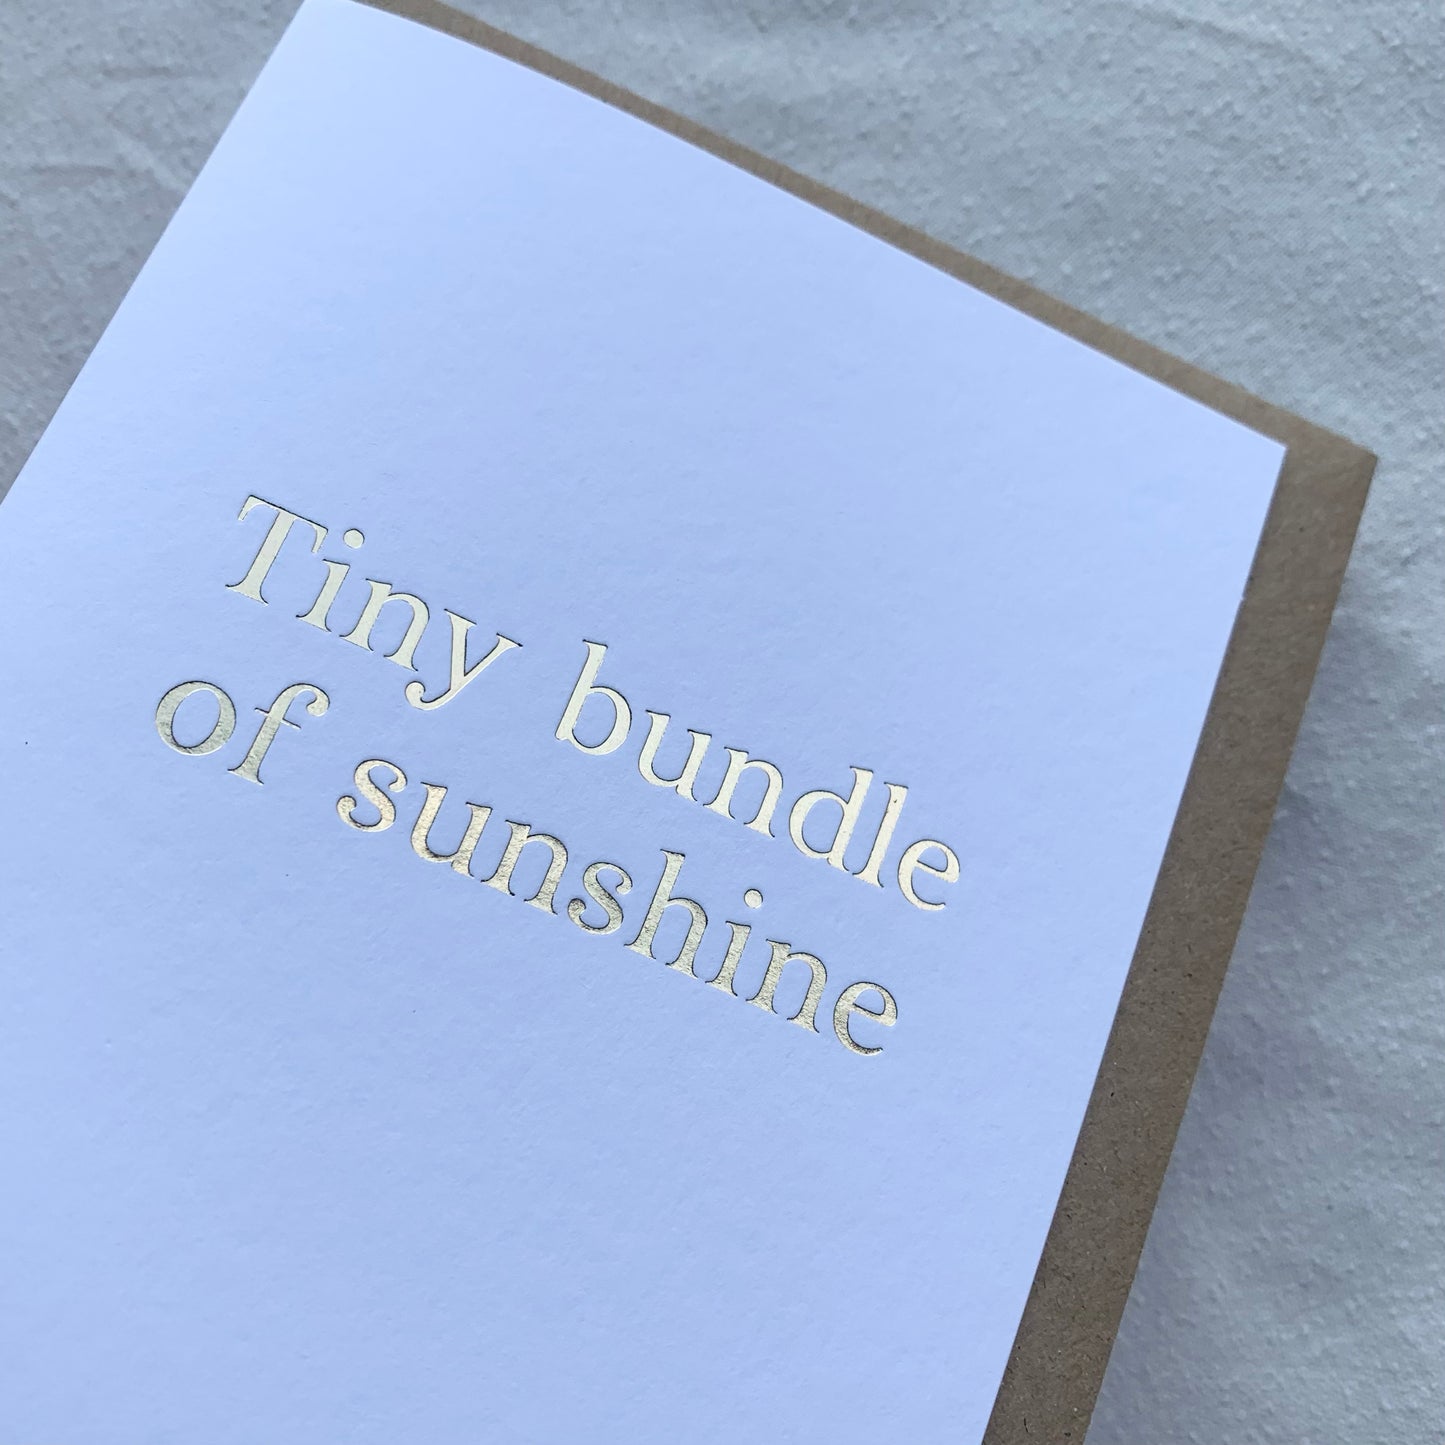 'Tiny Bundle Of Sunshine' Greetings Card